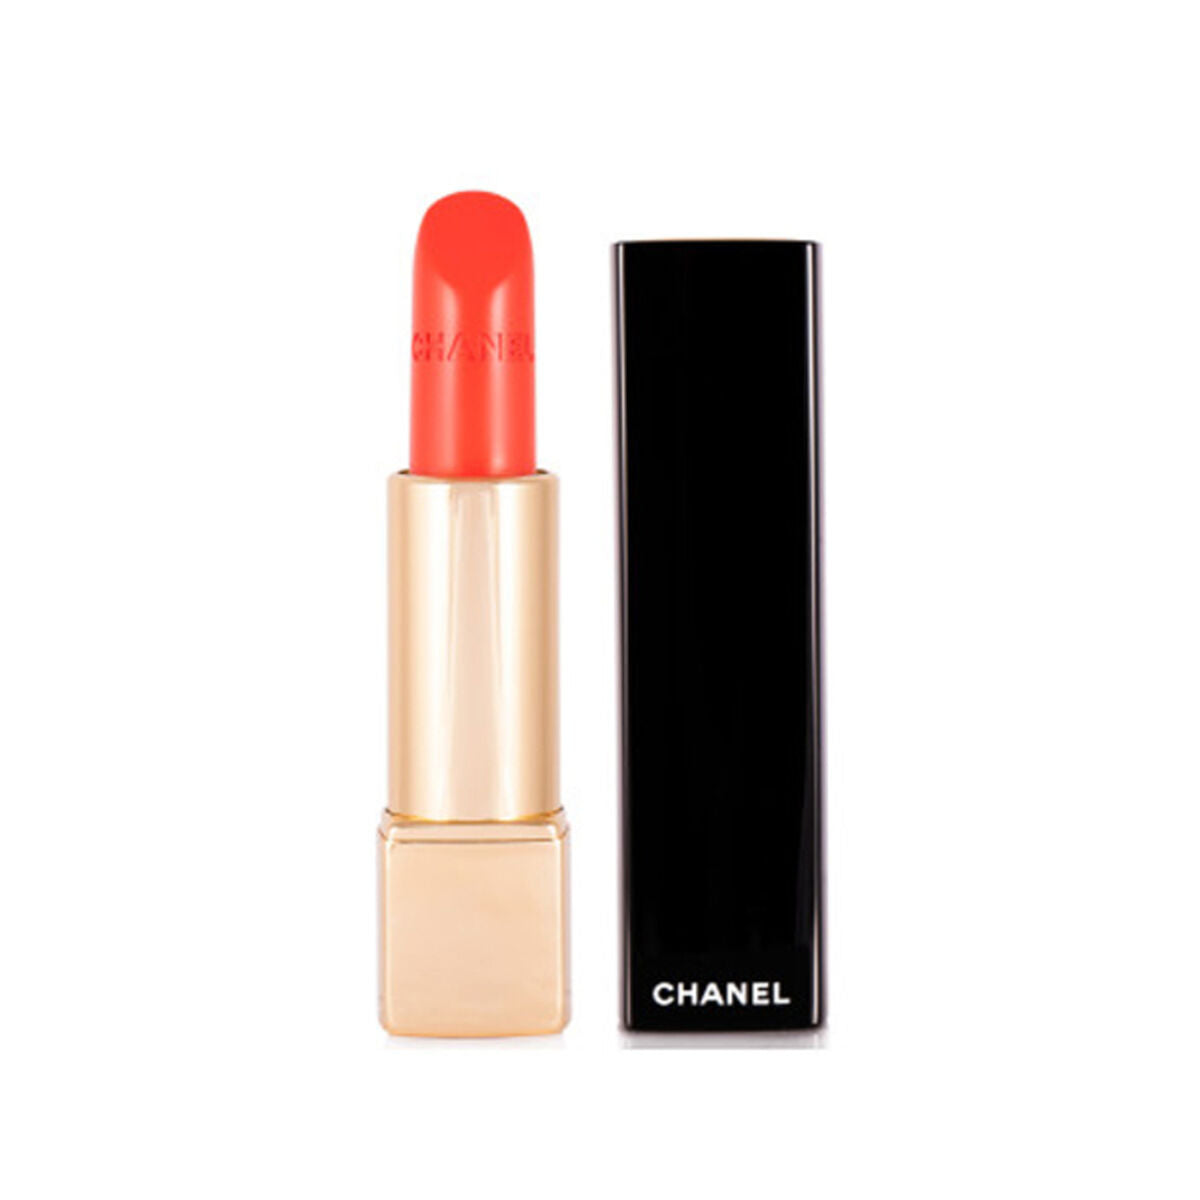 Kaufe Lippenstift Rouge Allure Chanel bei AWK Flagship um € 47.00